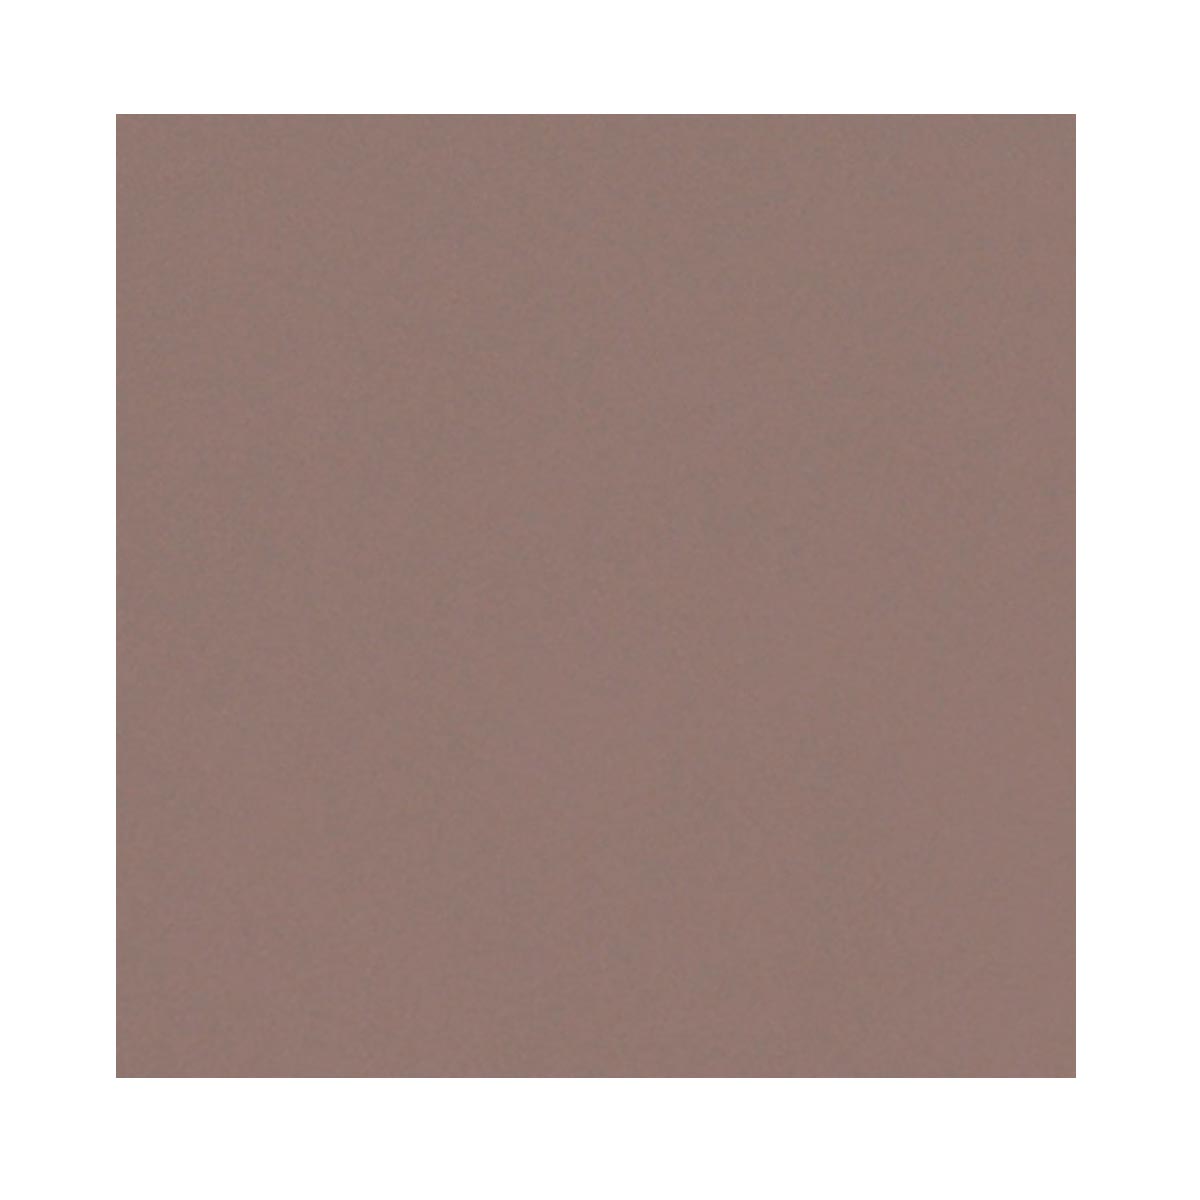 Clairefontaine Pastelmat - Brown 50 cm x 70 cm, 360 gsm